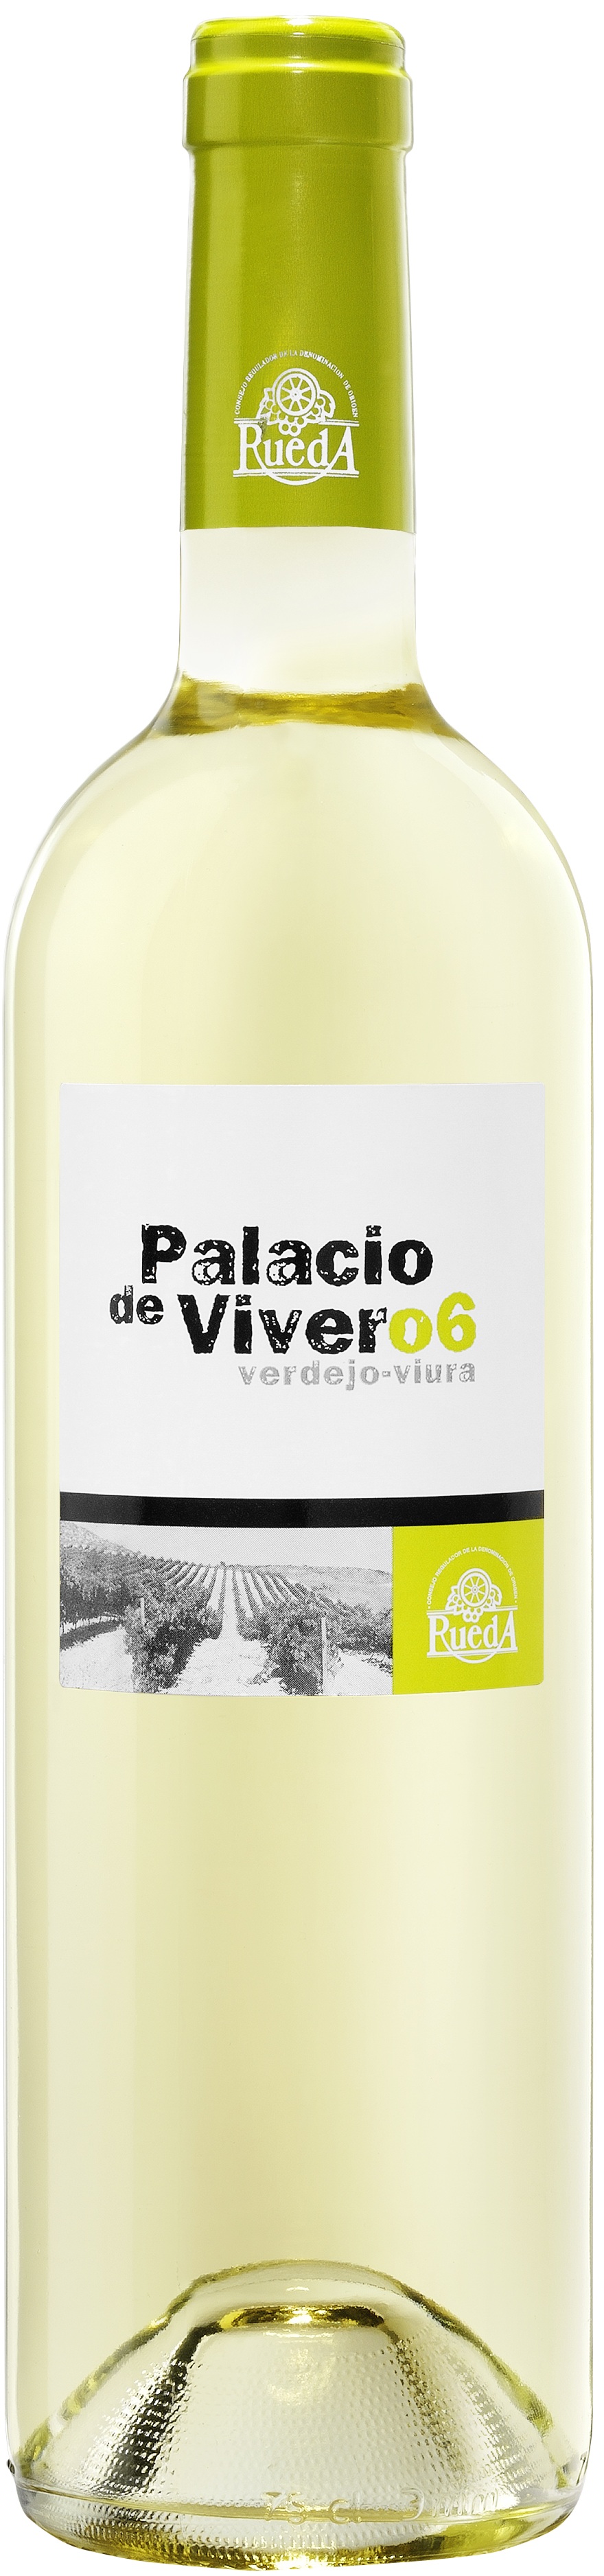 Imagen de la botella de Vino Palacio de Vivero Rueda